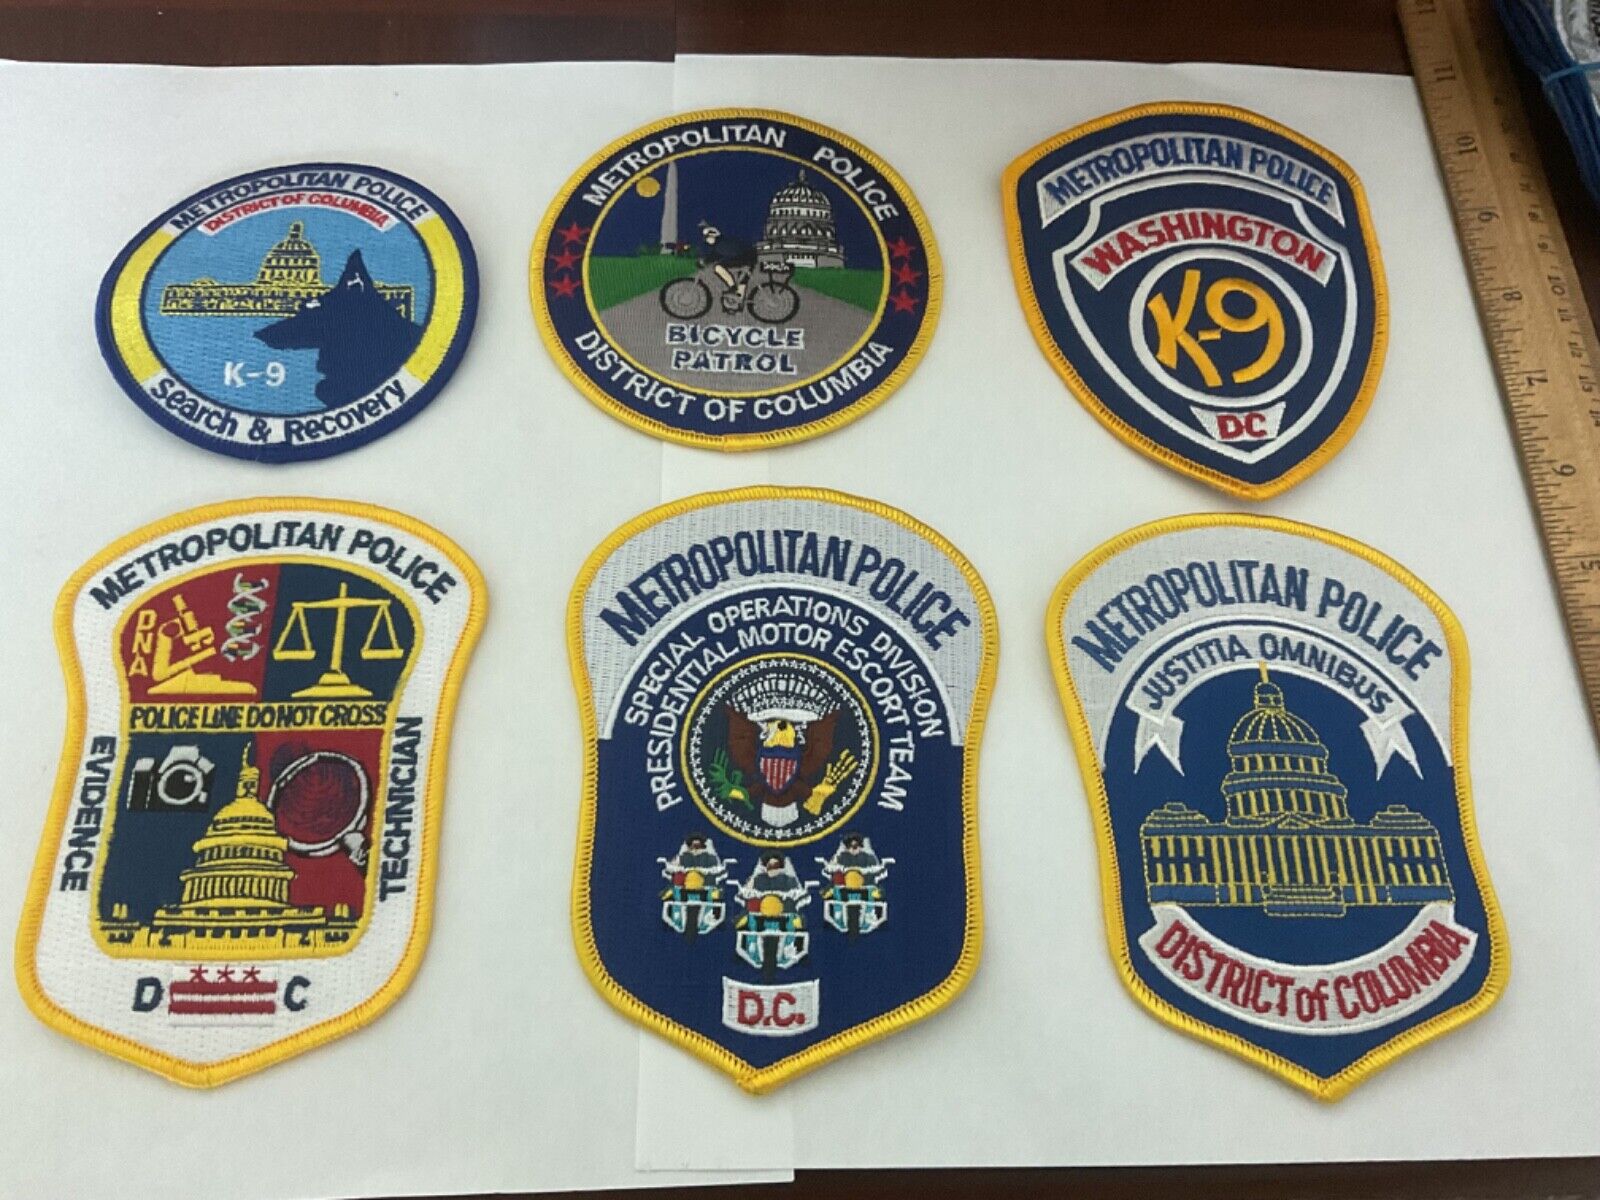 Metropolitan Police Washington DC Police collectors patch set 6 titles